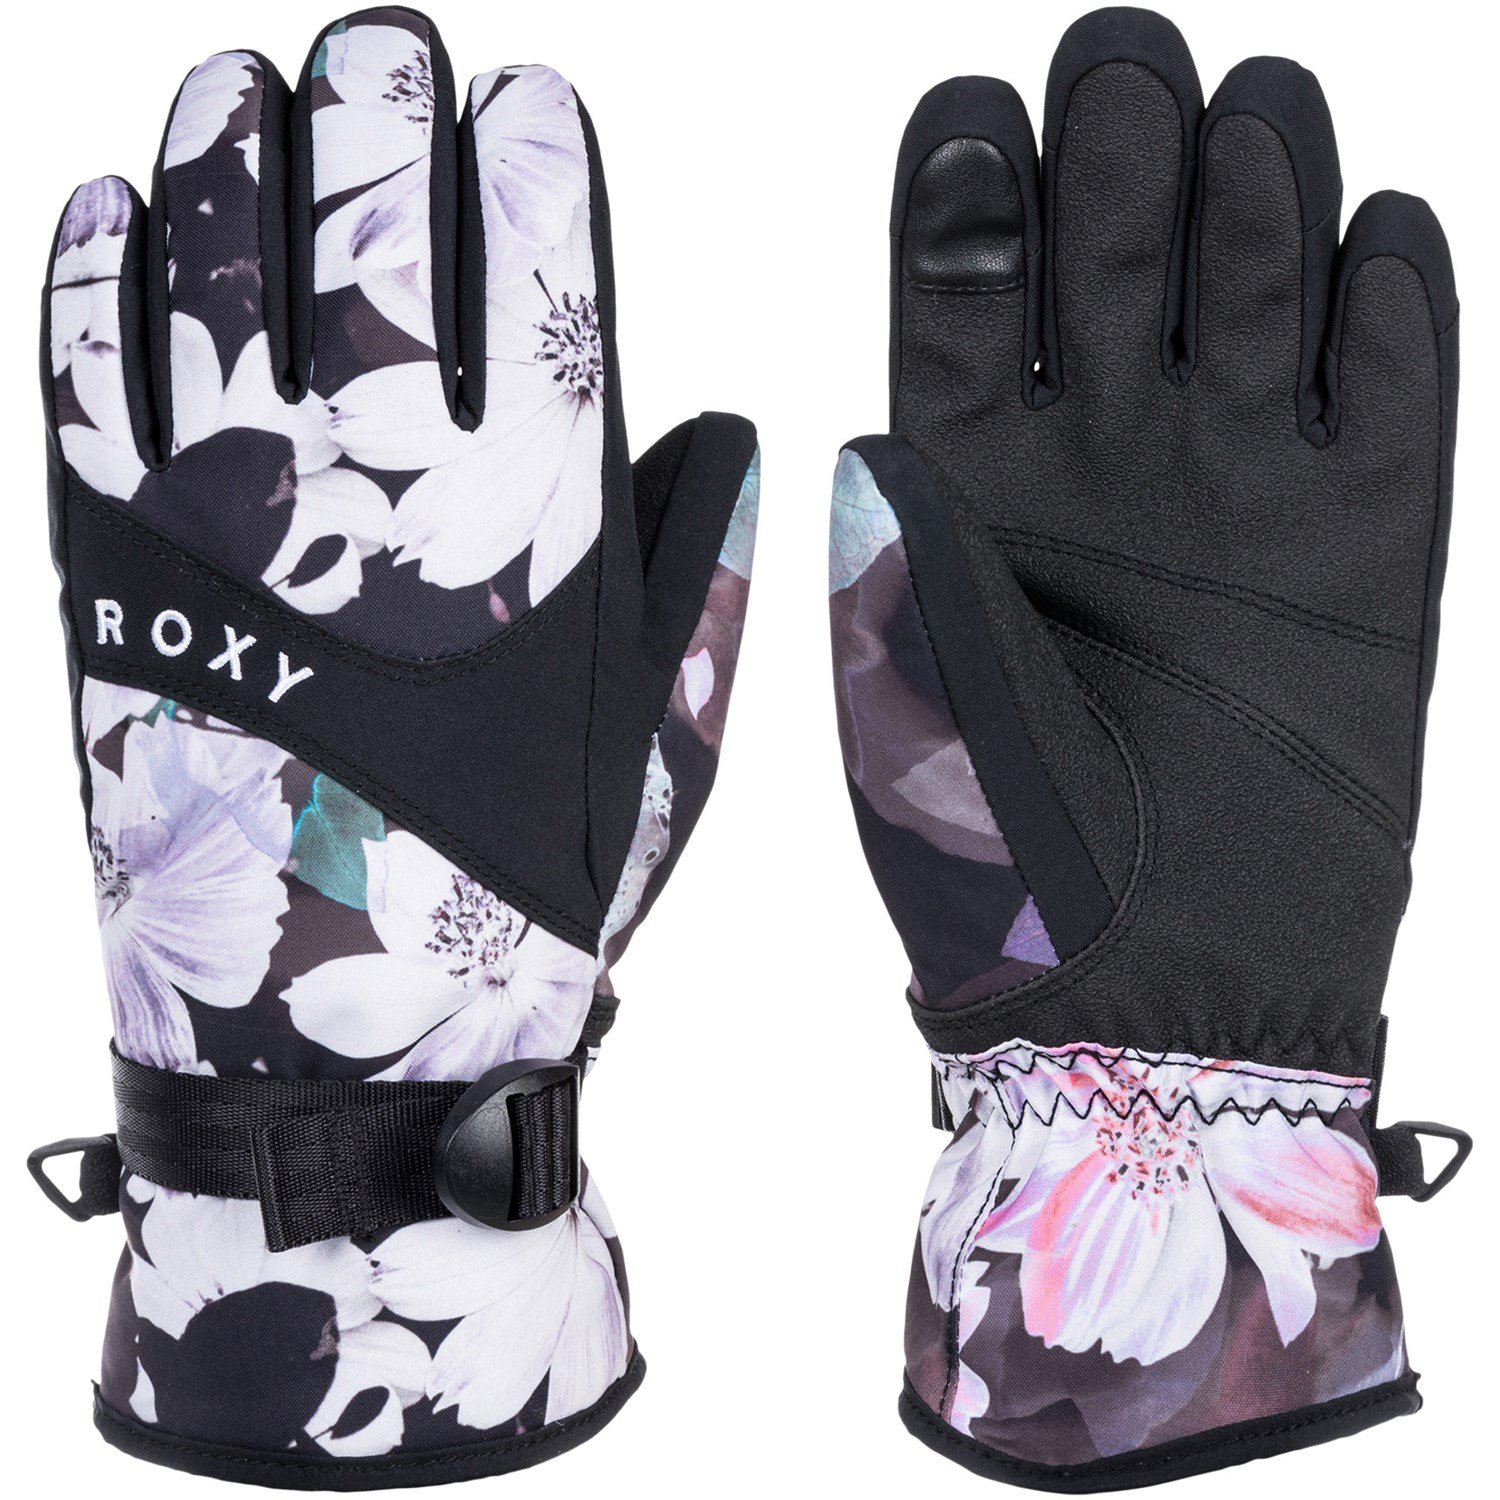 Перчатки roxy купить. Перчатки Рокси. Women's Roxy Gloves Canada. Snowboarding Technic Compression.